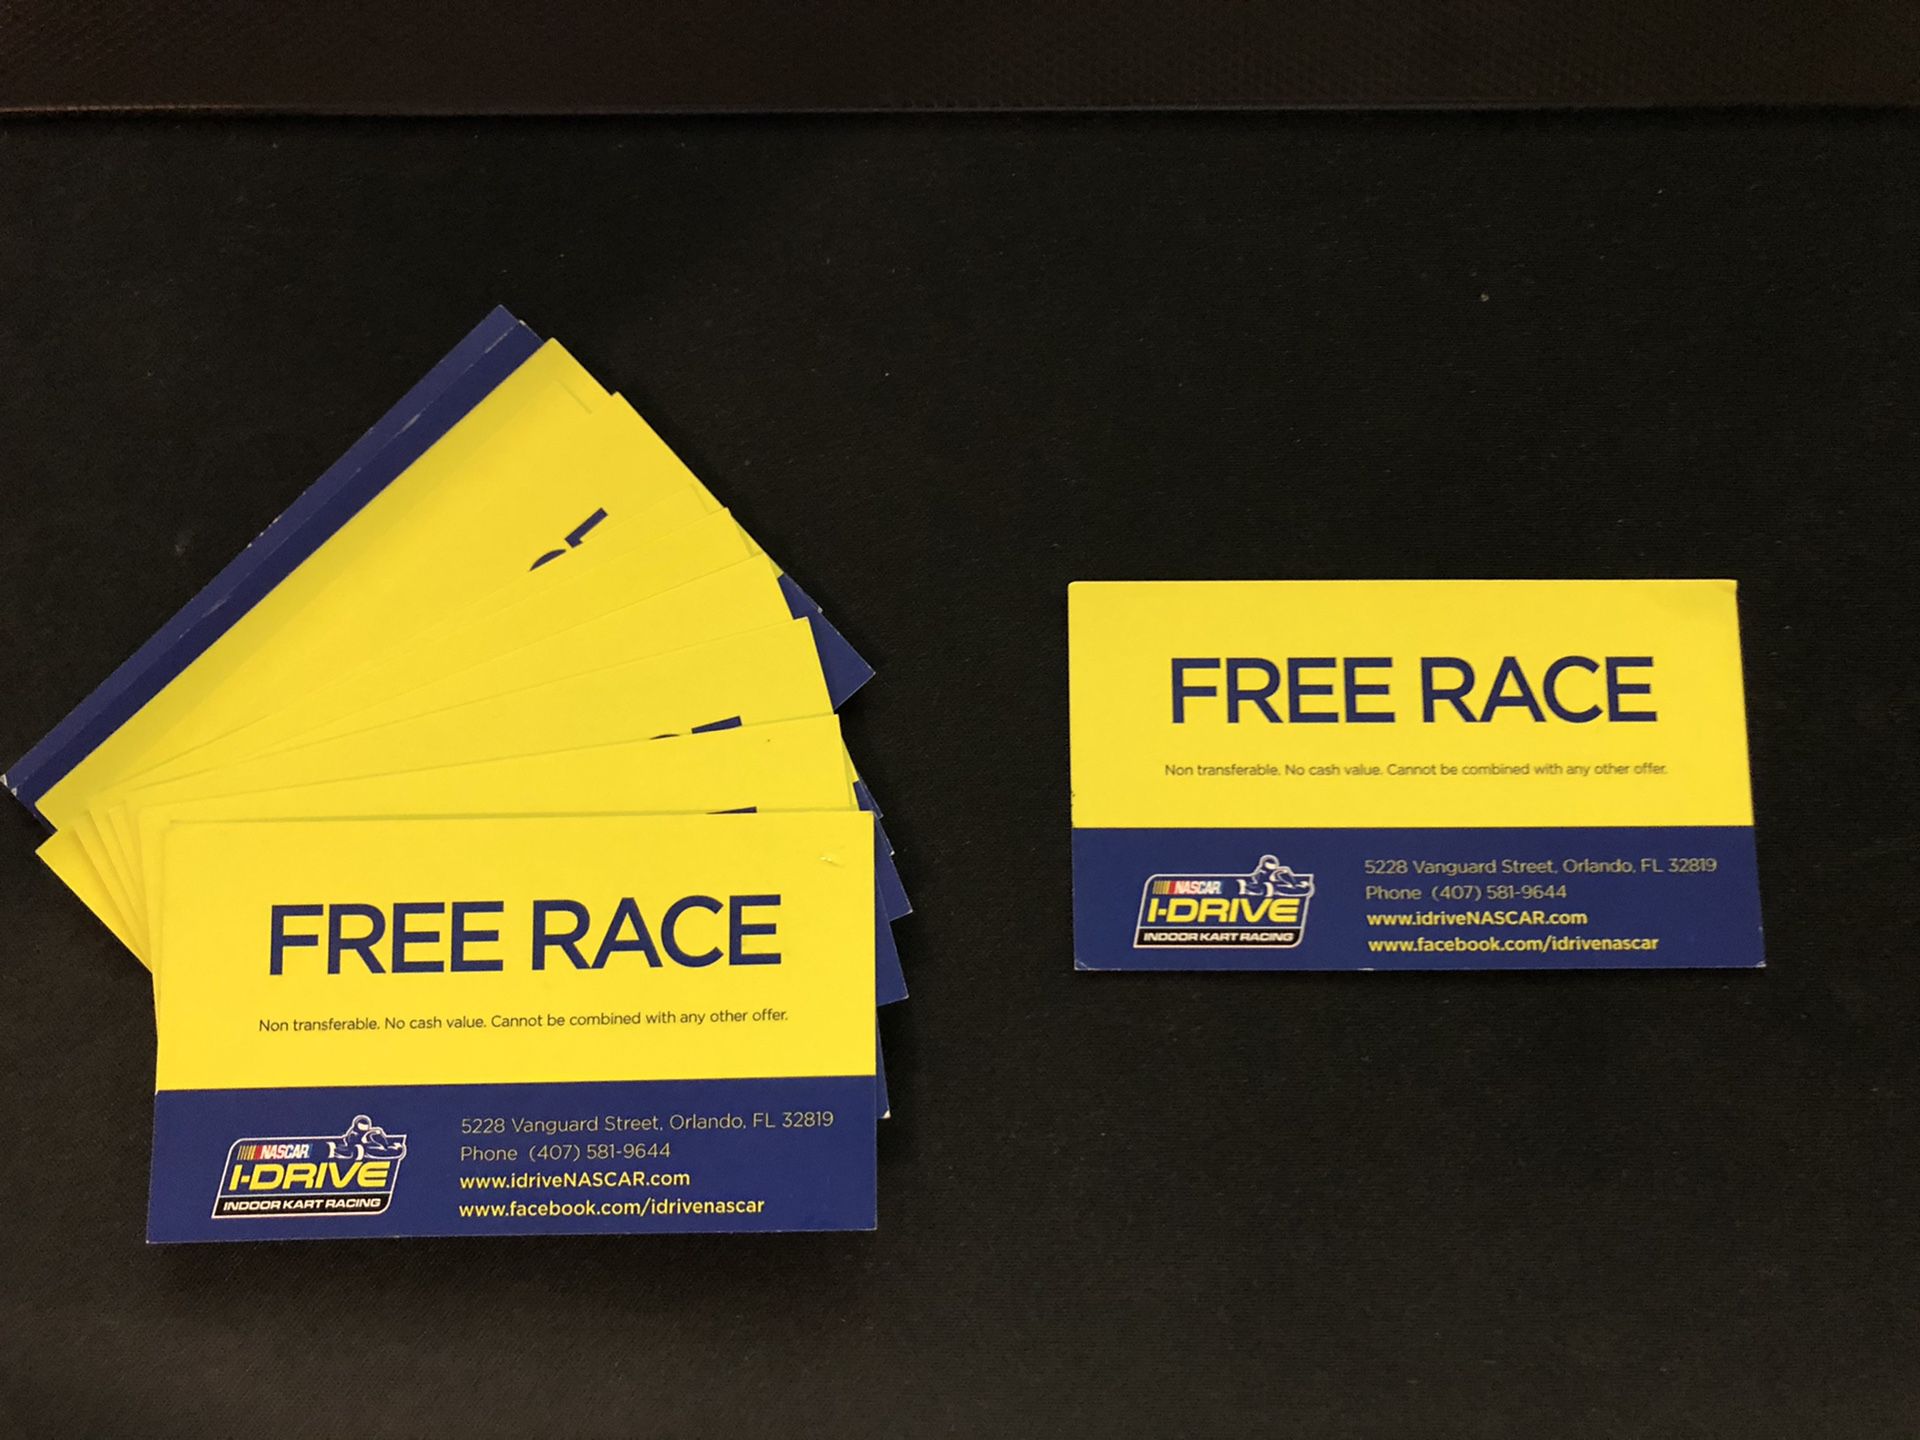 I-Drive Nascar Indoor Kart Racing FREE RACING COMPLIMENTARY CARD SALE